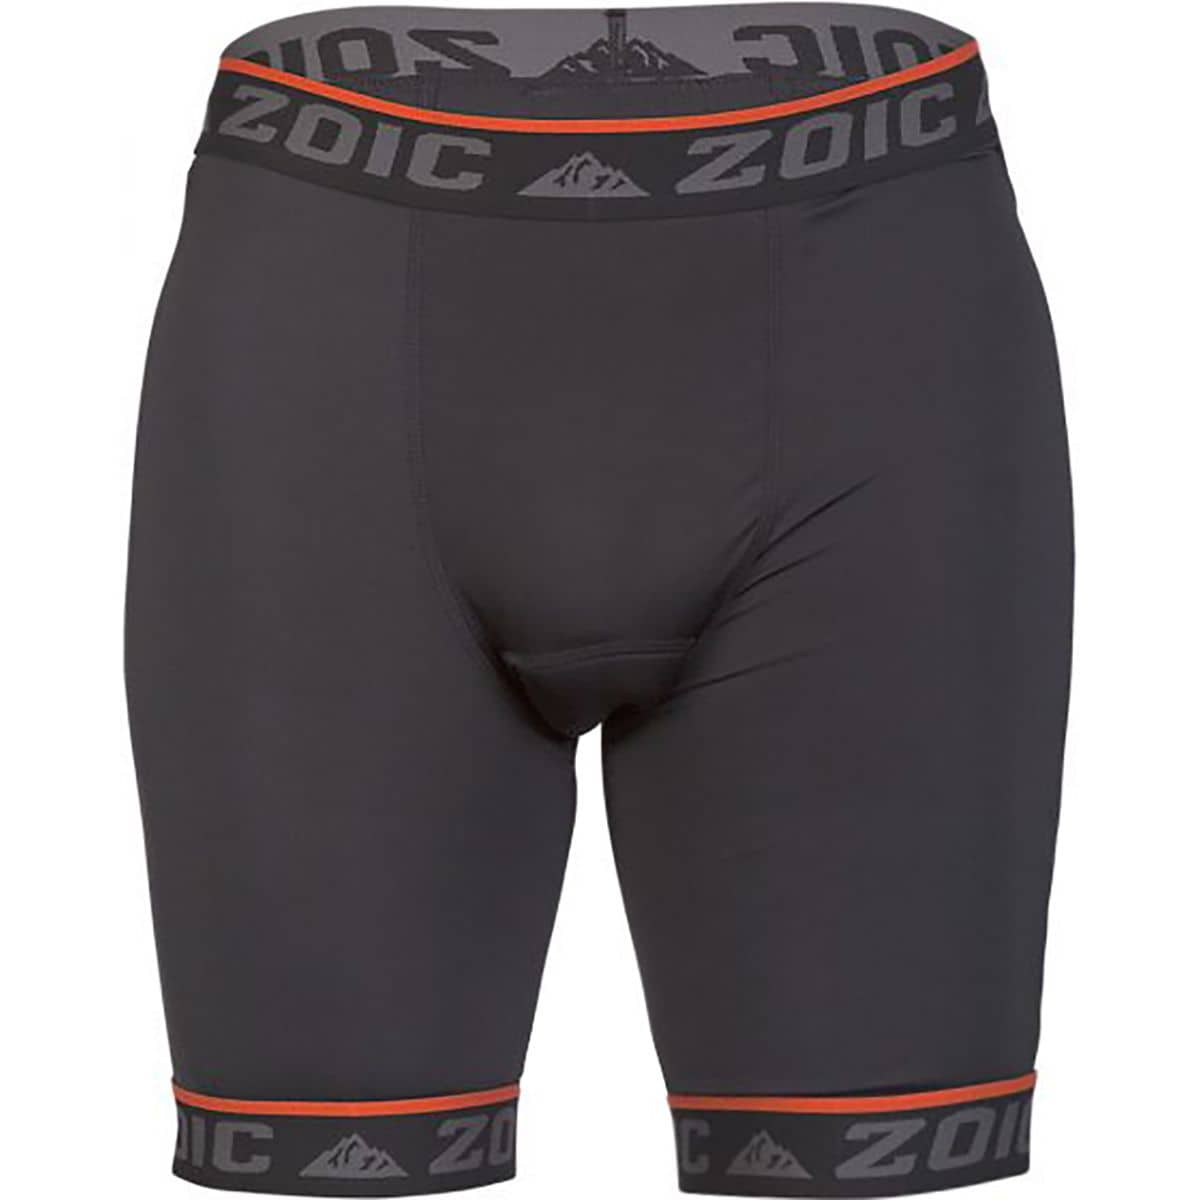 ZOIC Premium Liner Shorts - Men's